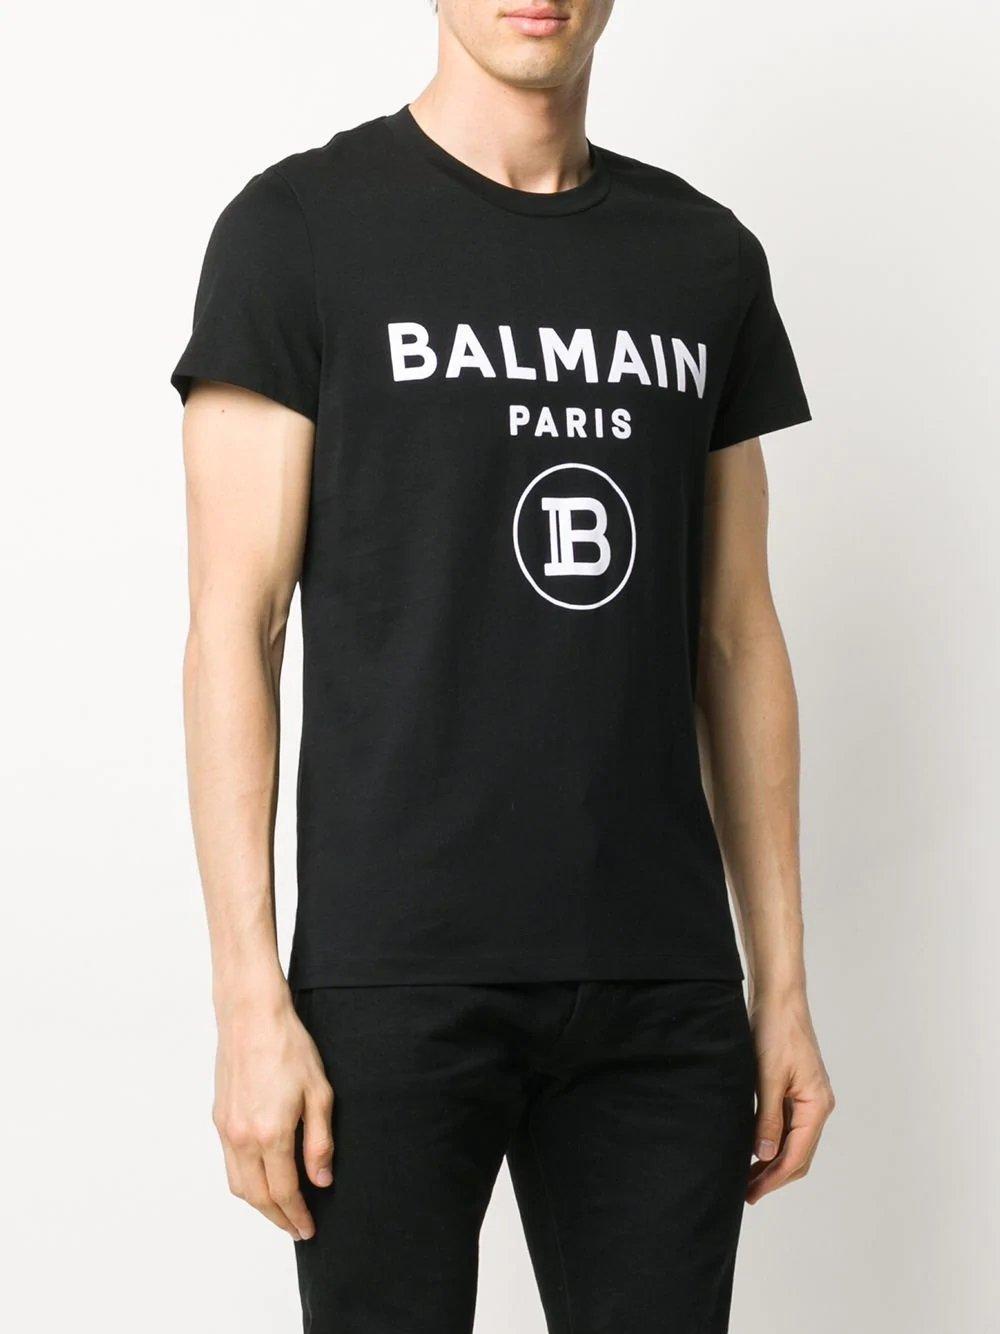 Balmain T-shirts in Black for Men - Lyst